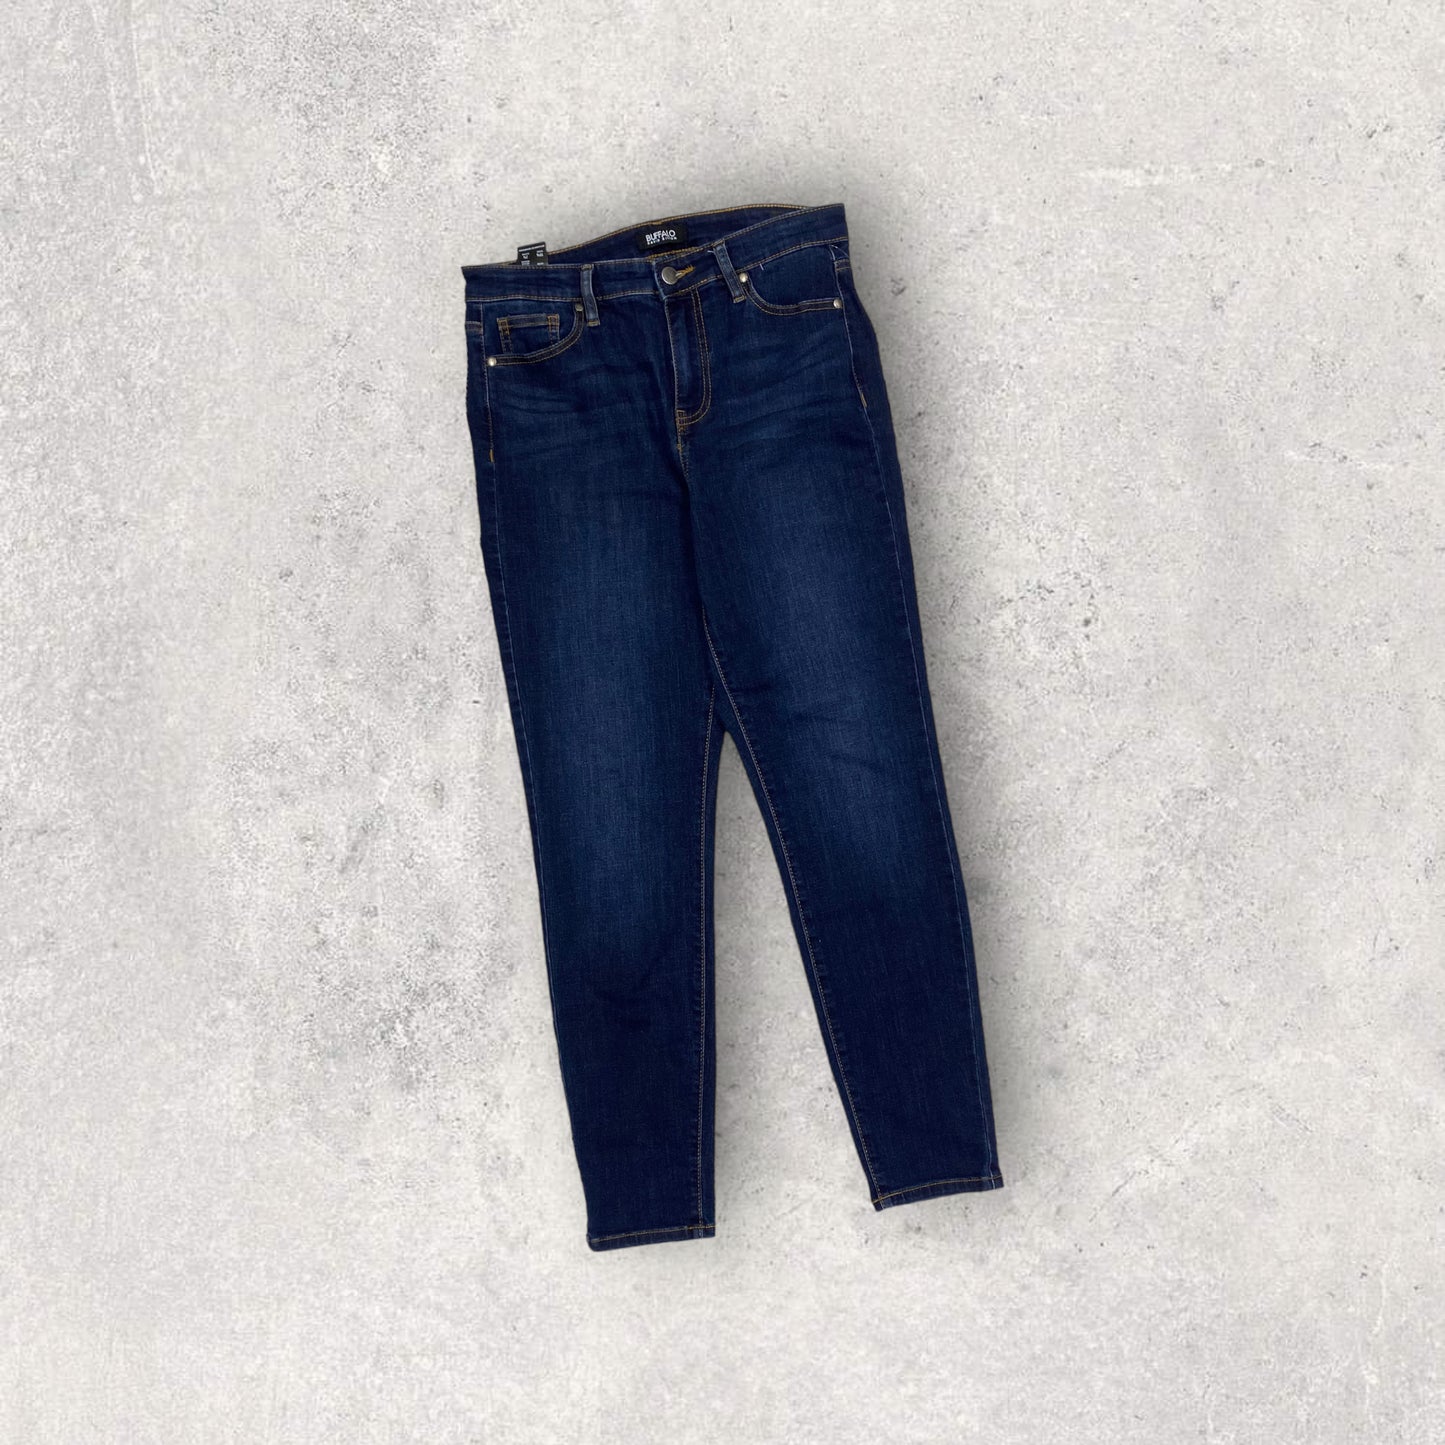 Jeans Skinny By Buffalo  Size: 6